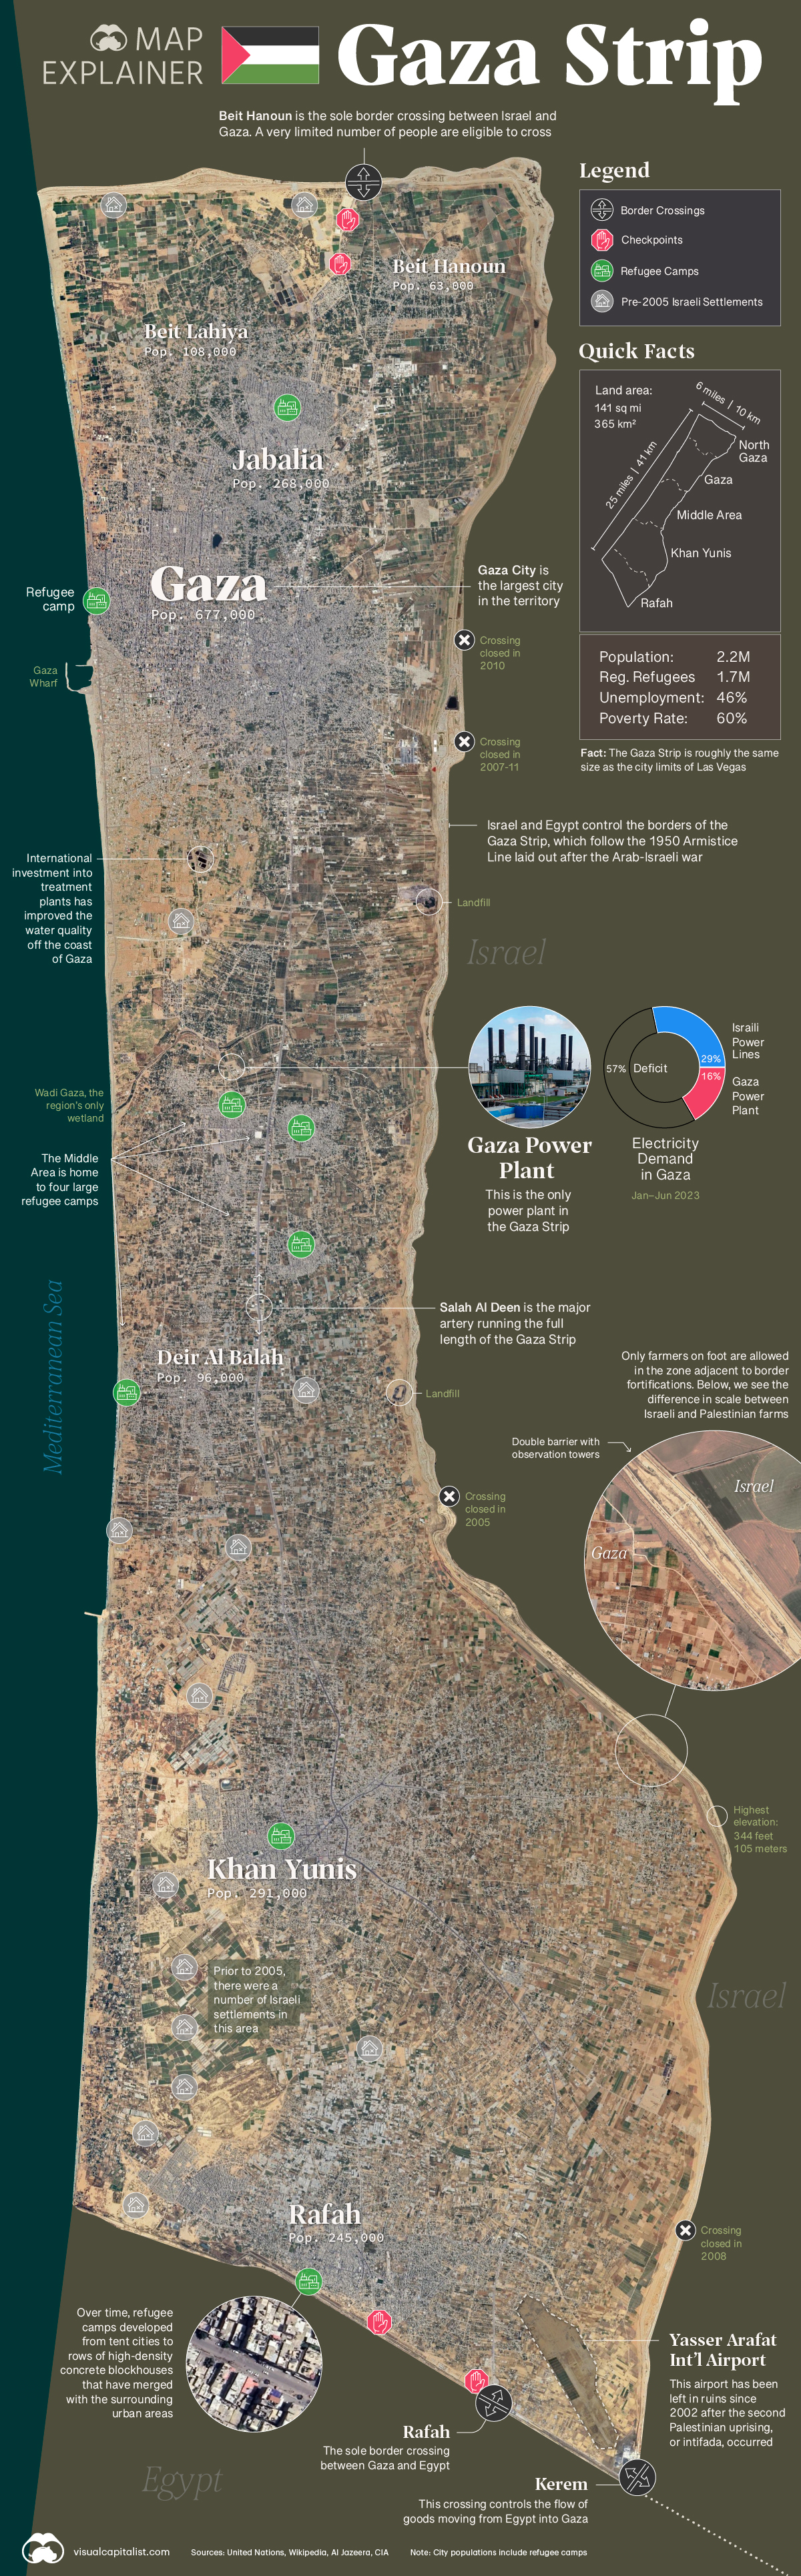 gaza-strip-map-explainer.jpg